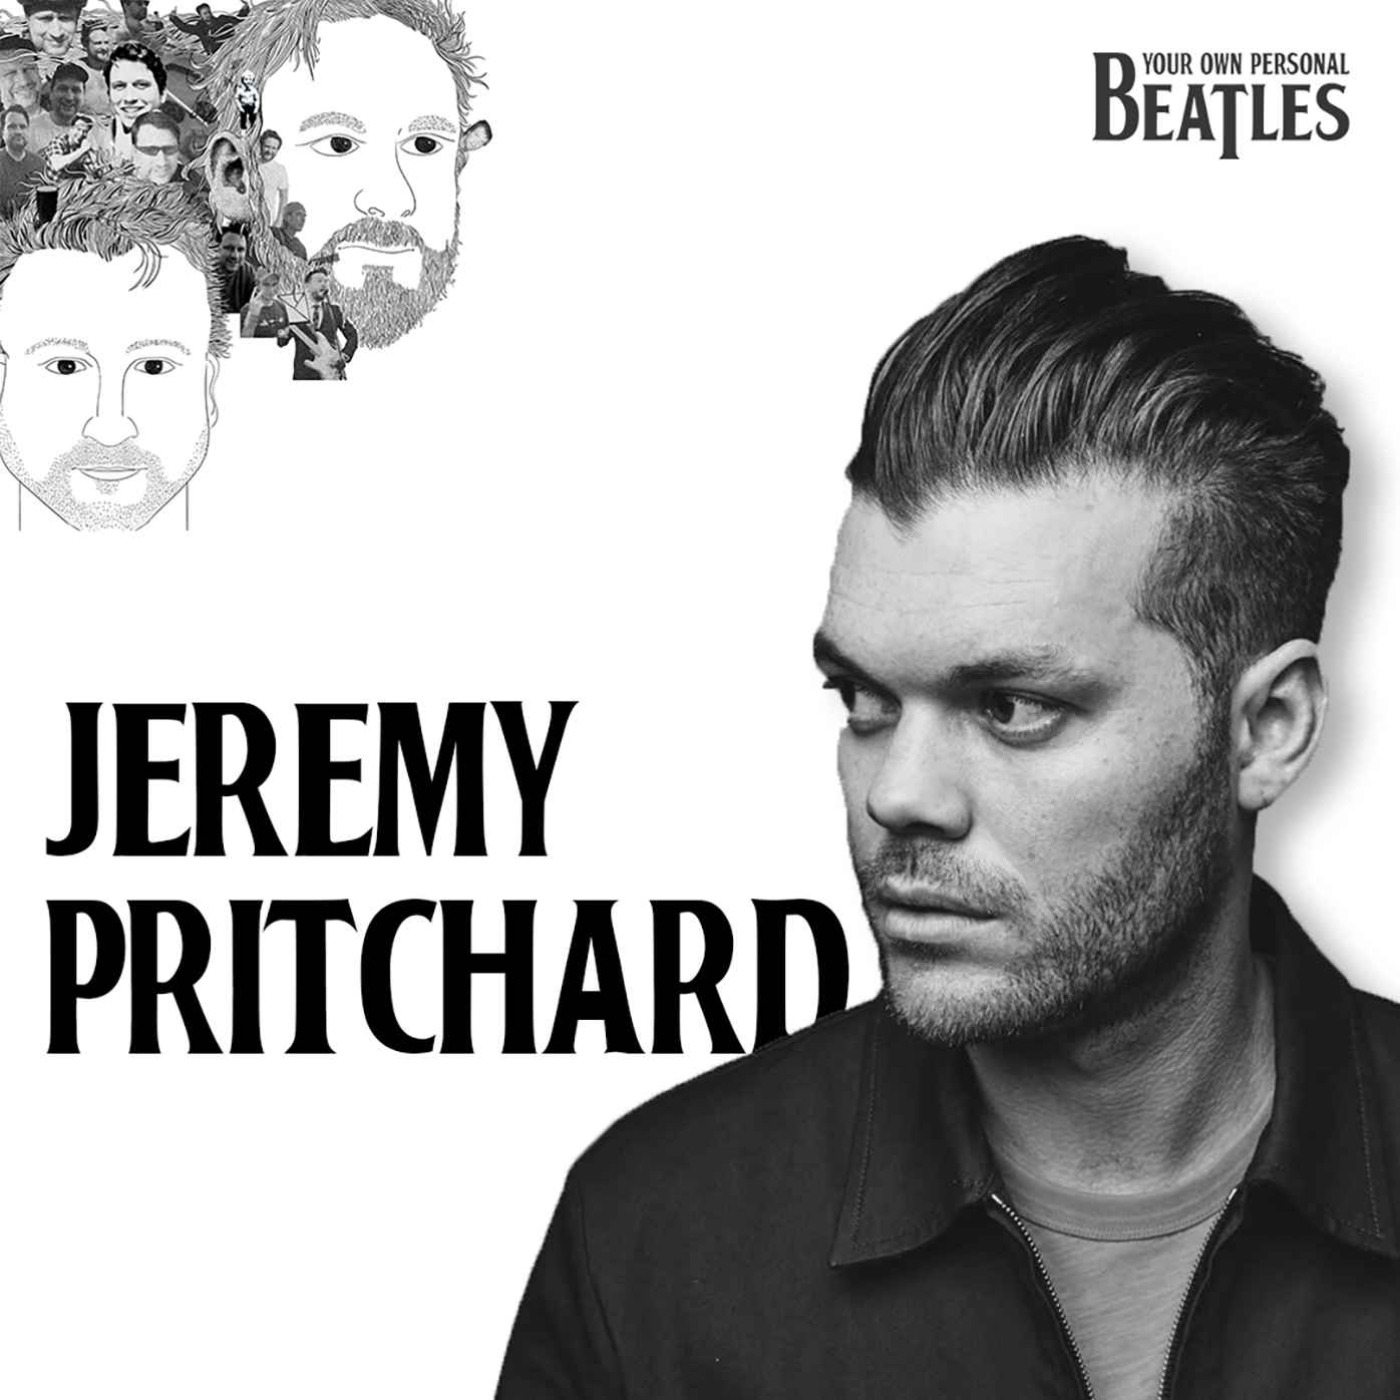 Jeremy Pritchard's Personal Beatles